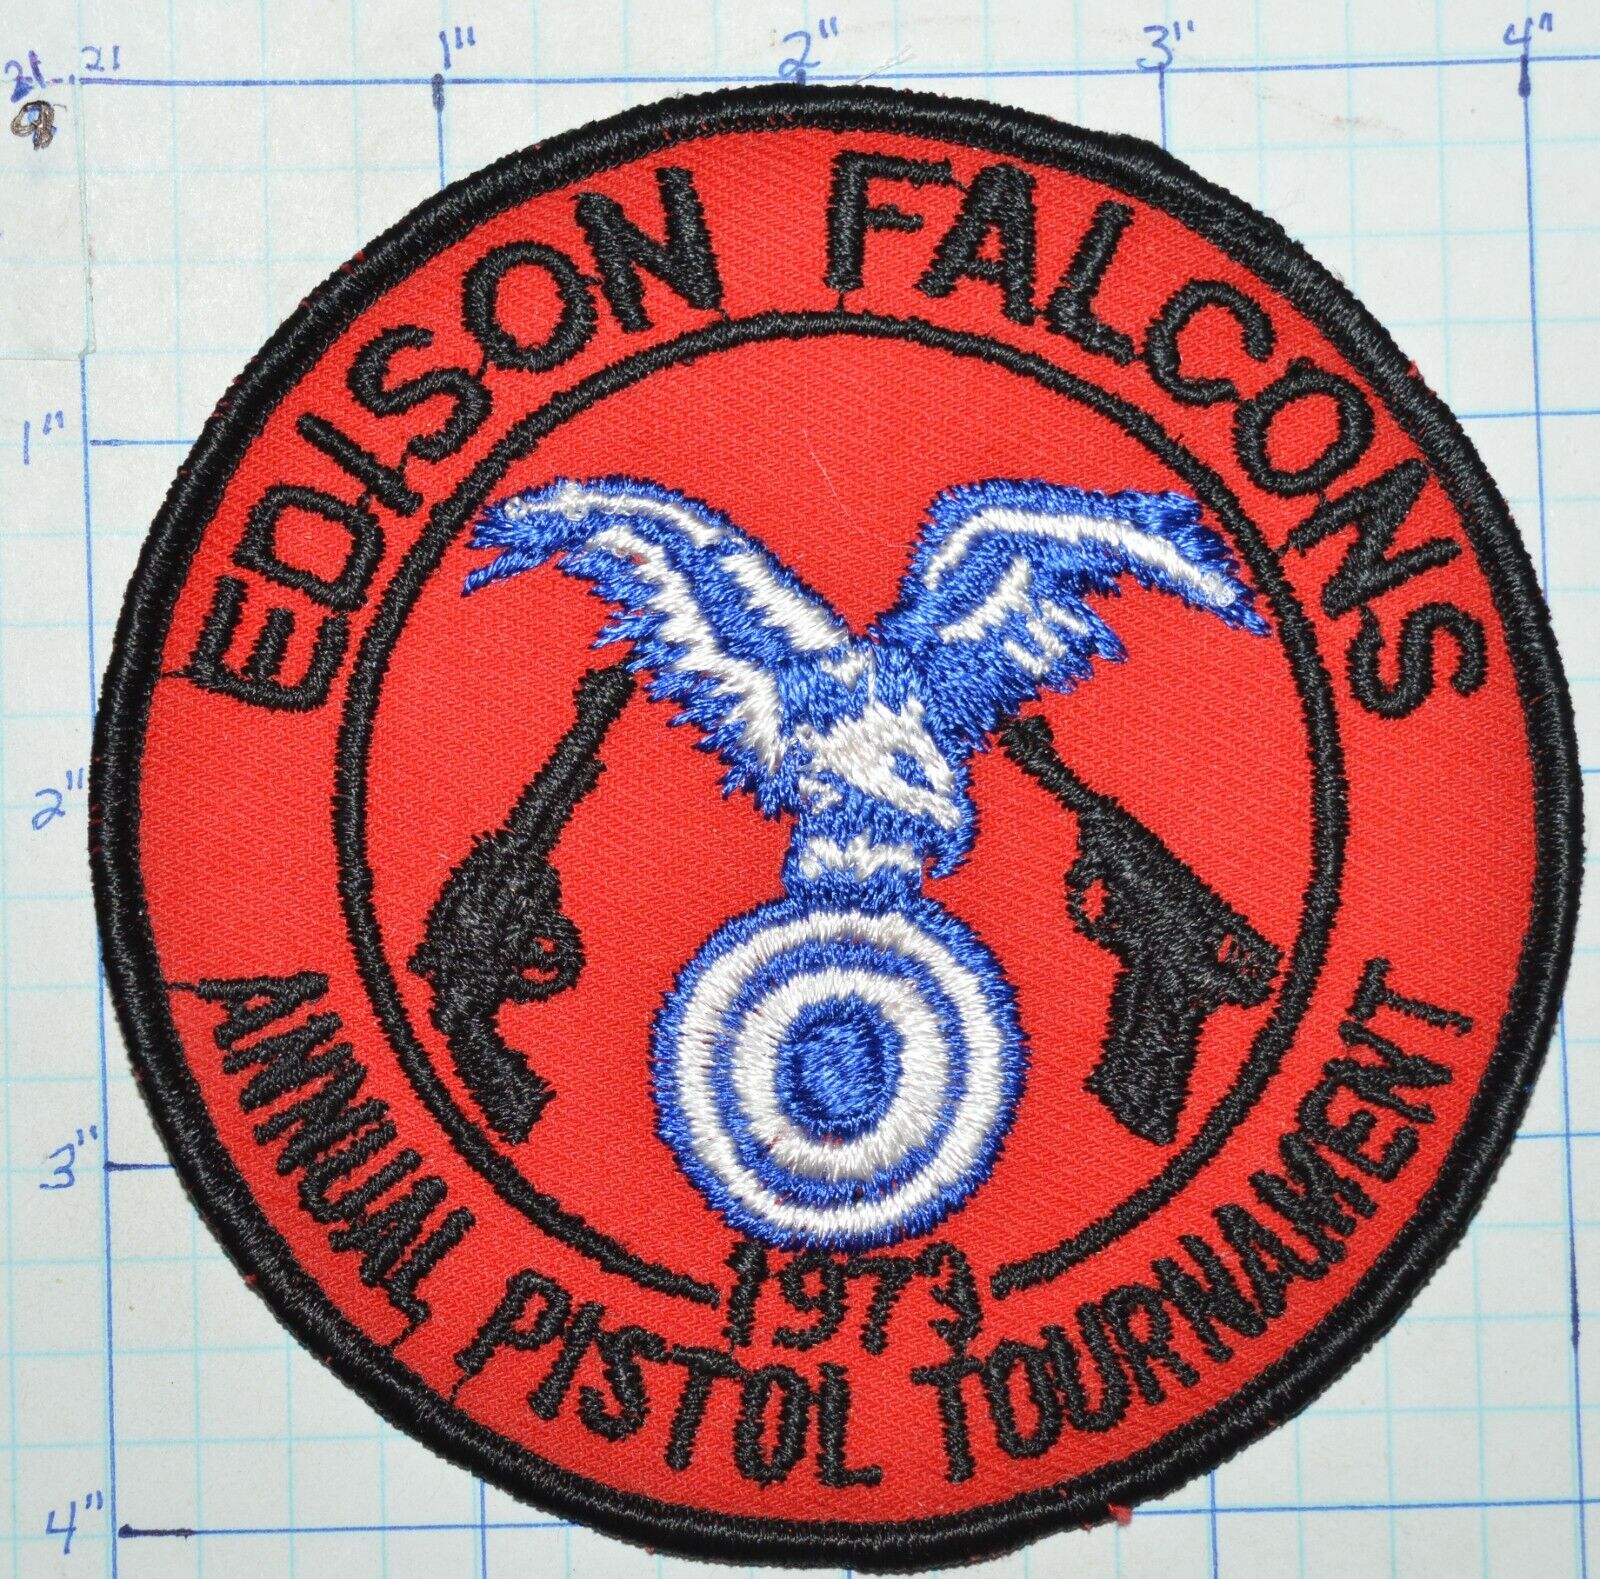 NEW JERSEY? EDISON FALCONS ANNUAL PISTOL TOURNAMENT 1973 PATCH